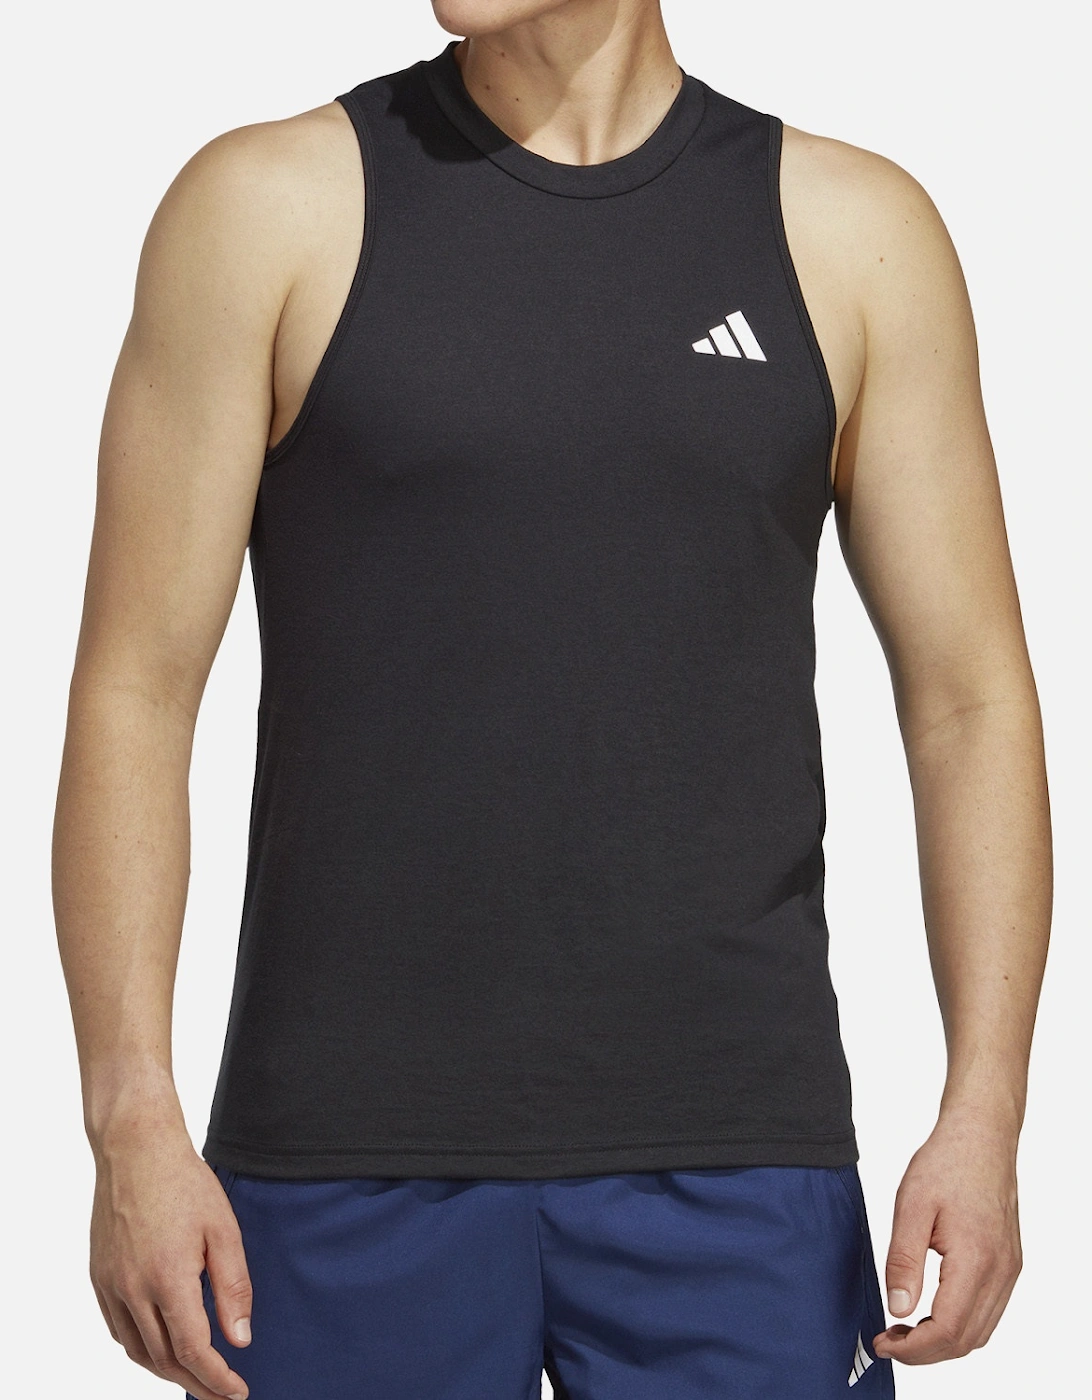 Mens Sleeveless Training T-Shirt (Black)